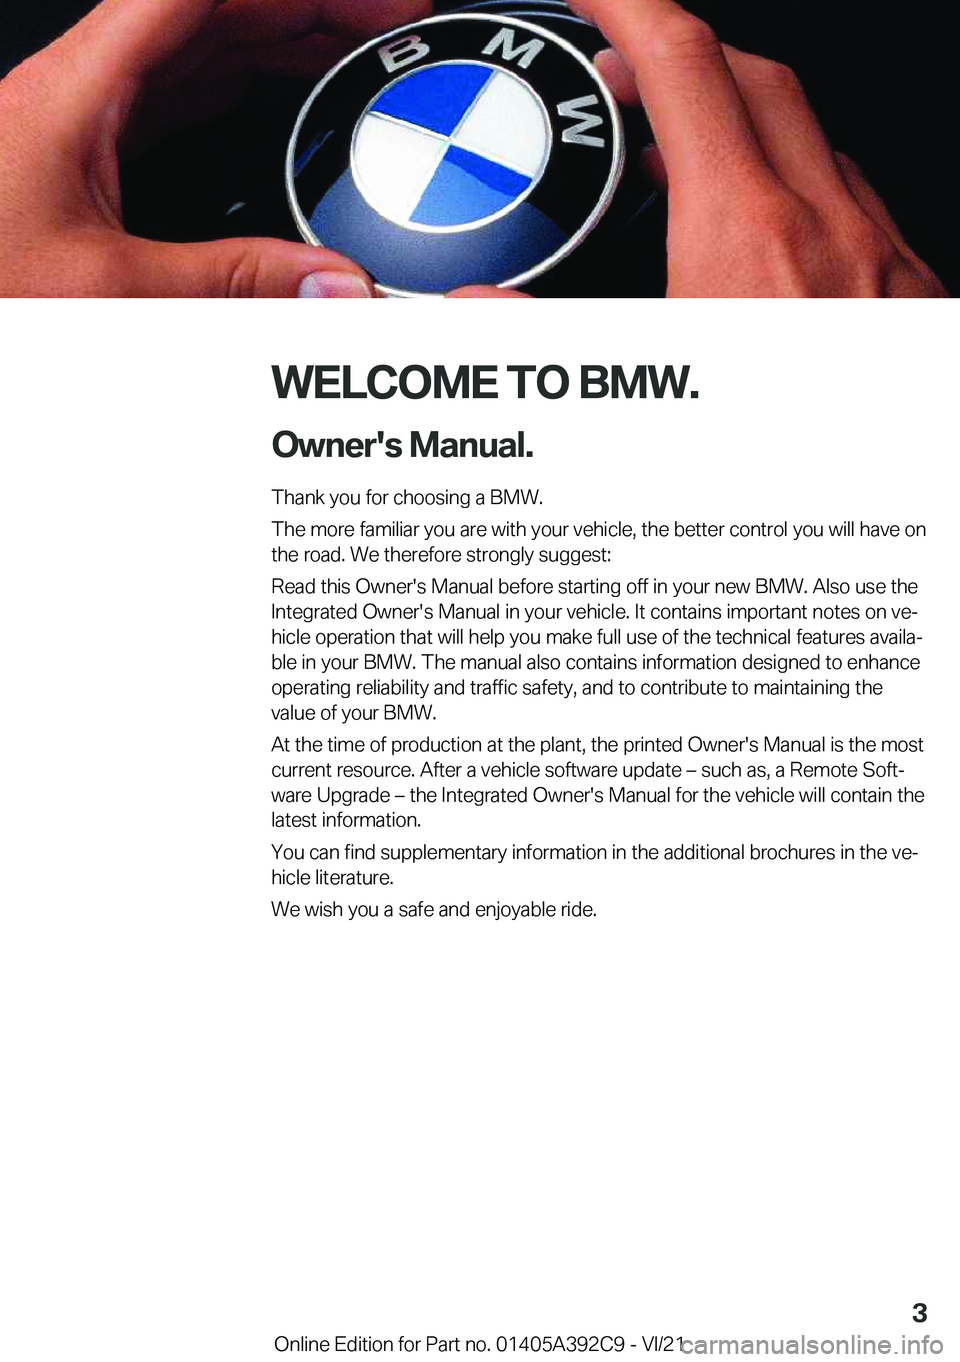 BMW 4 SERIES 2022  Owners Manual �W�E�L�C�O�M�E��T�O��B�M�W�.�O�w�n�e�r�'�s��M�a�n�u�a�l�.
�T�h�a�n�k��y�o�u��f�o�r��c�h�o�o�s�i�n�g��a��B�M�W�.
�T�h�e��m�o�r�e��f�a�m�i�l�i�a�r��y�o�u��a�r�e��w�i�t�h��y�o�u�r��v�e